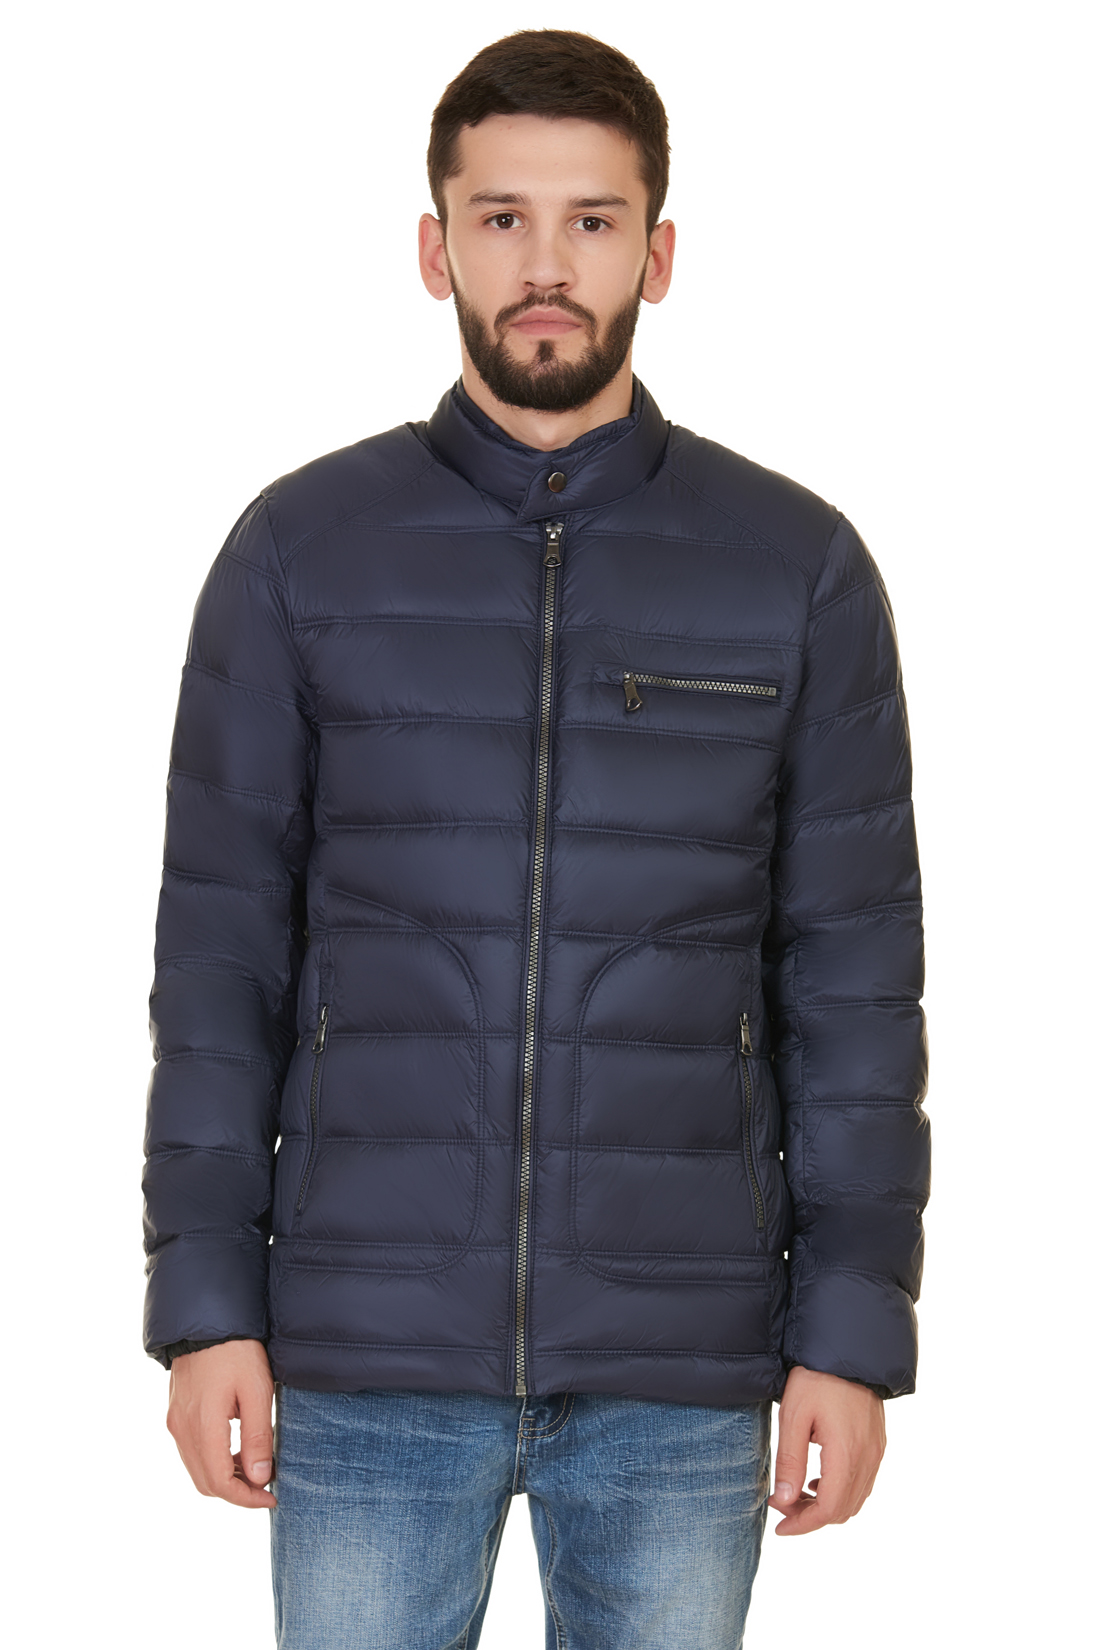 Куртка с прострочкой (арт. baon B537560), размер XL, цвет синий Куртка с прострочкой (арт. baon B537560) - фото 1